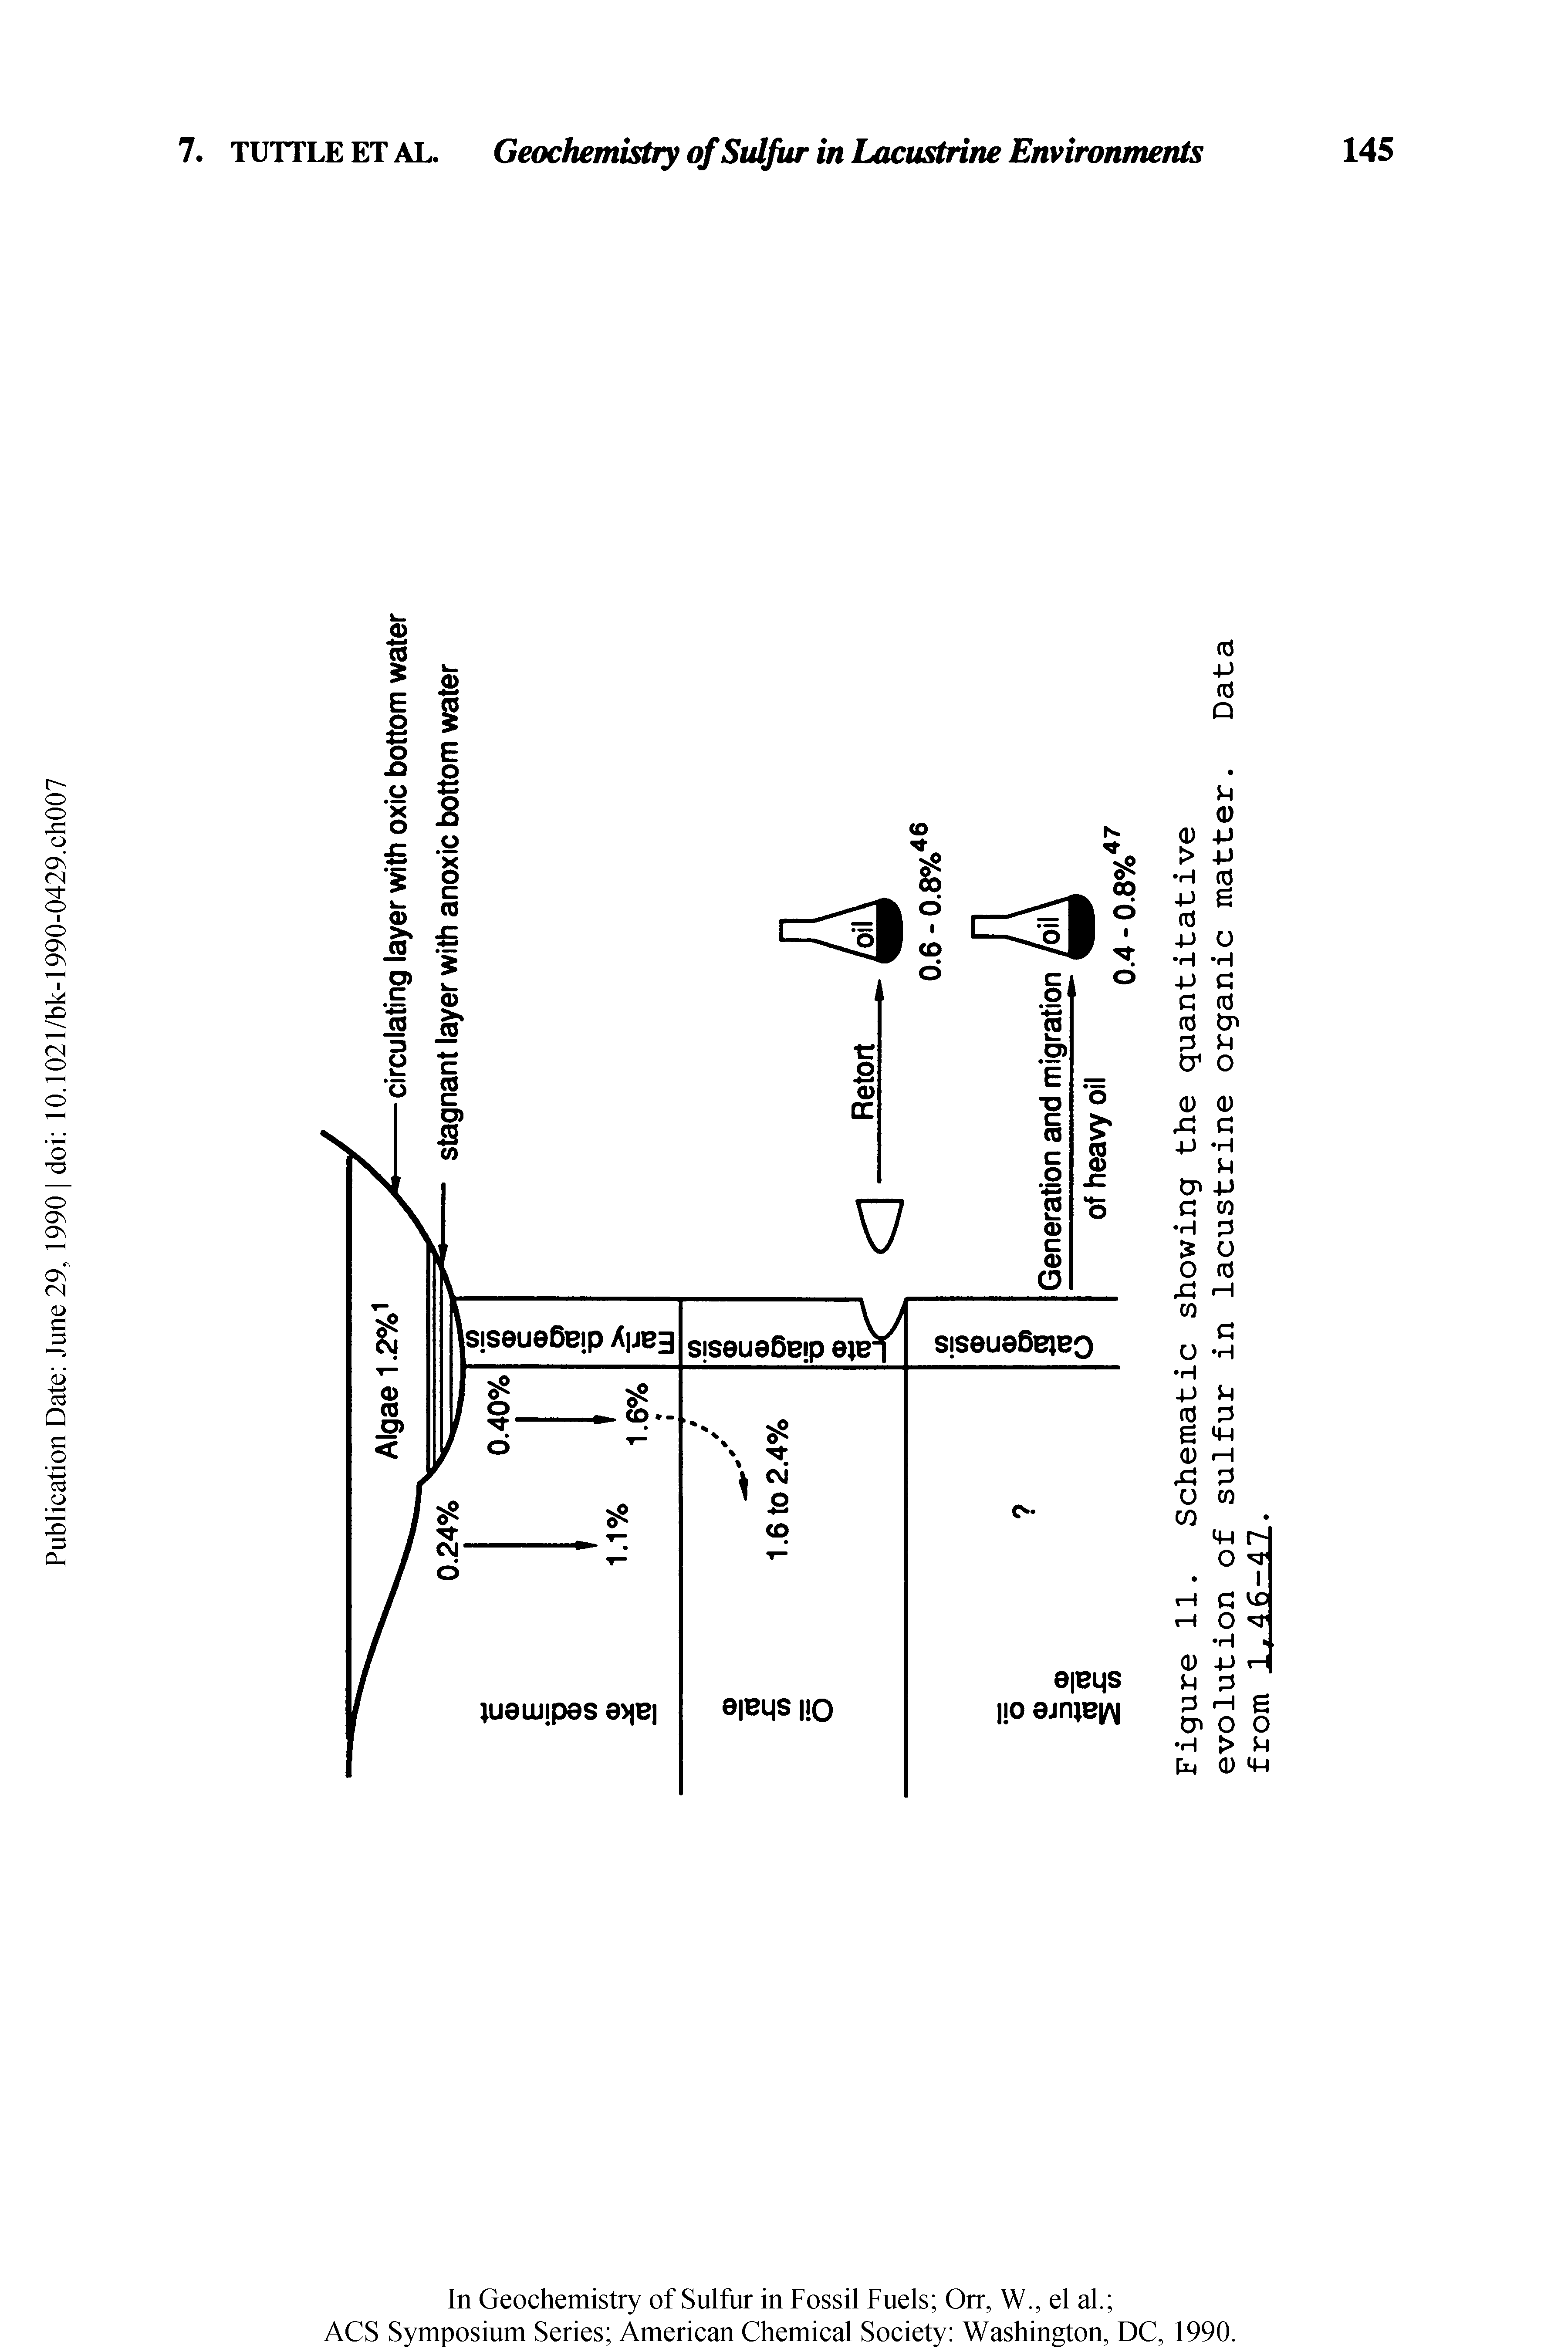 Figure 11. Schematic showing the quantitative evolution of sulfur in lacustrine organic matter. Data from 1,16.-12.